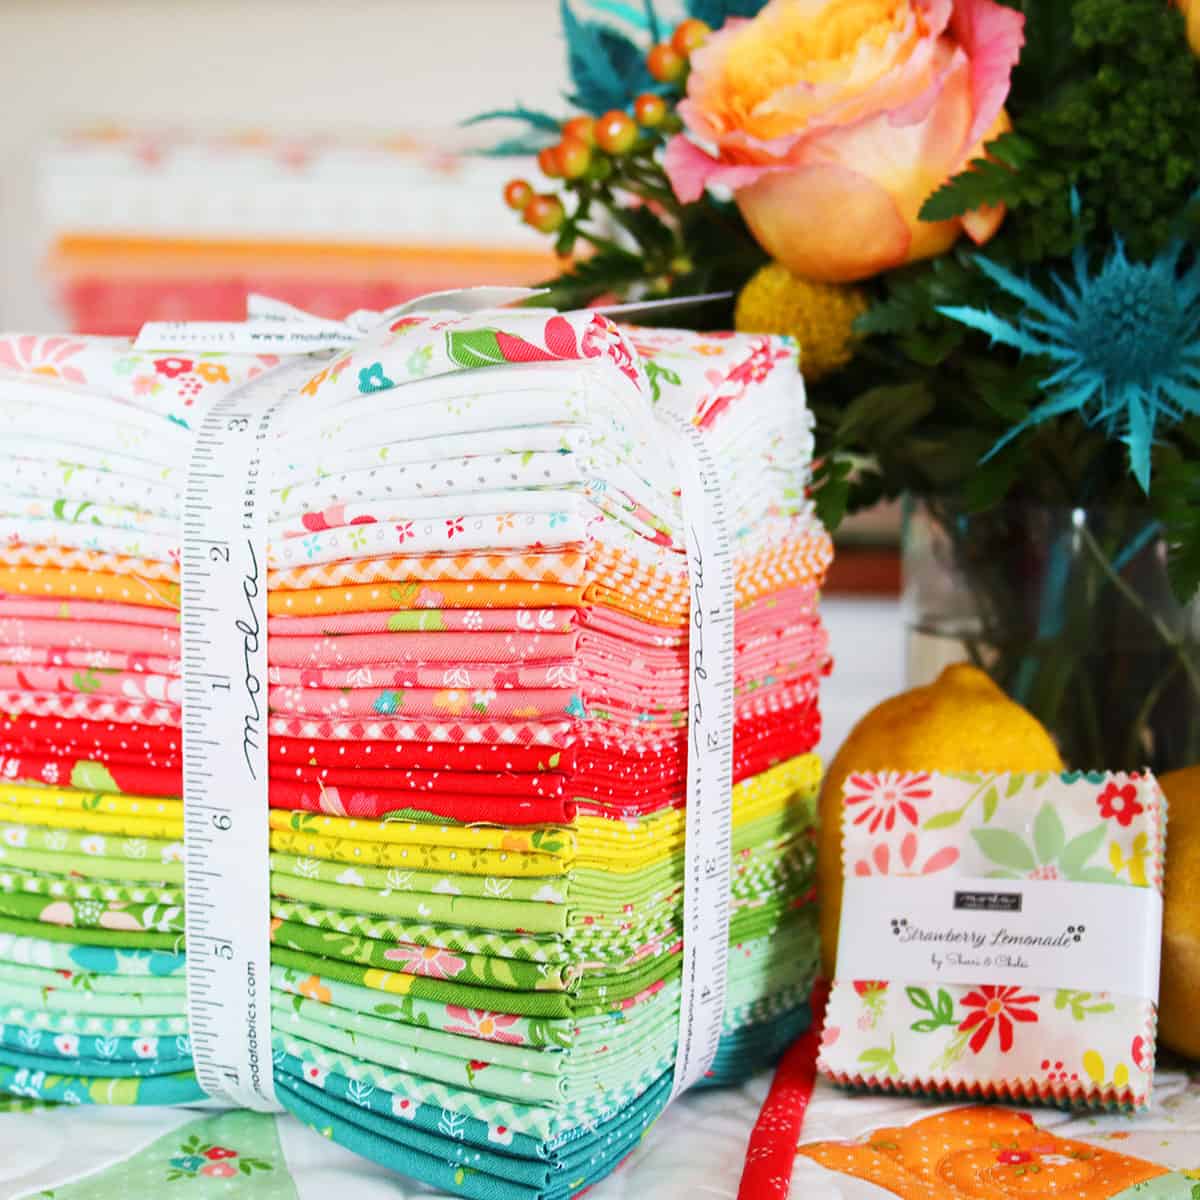 Strawberry Lemonade floral print quilting fabrics by Sherri & Chelsi for Moda.